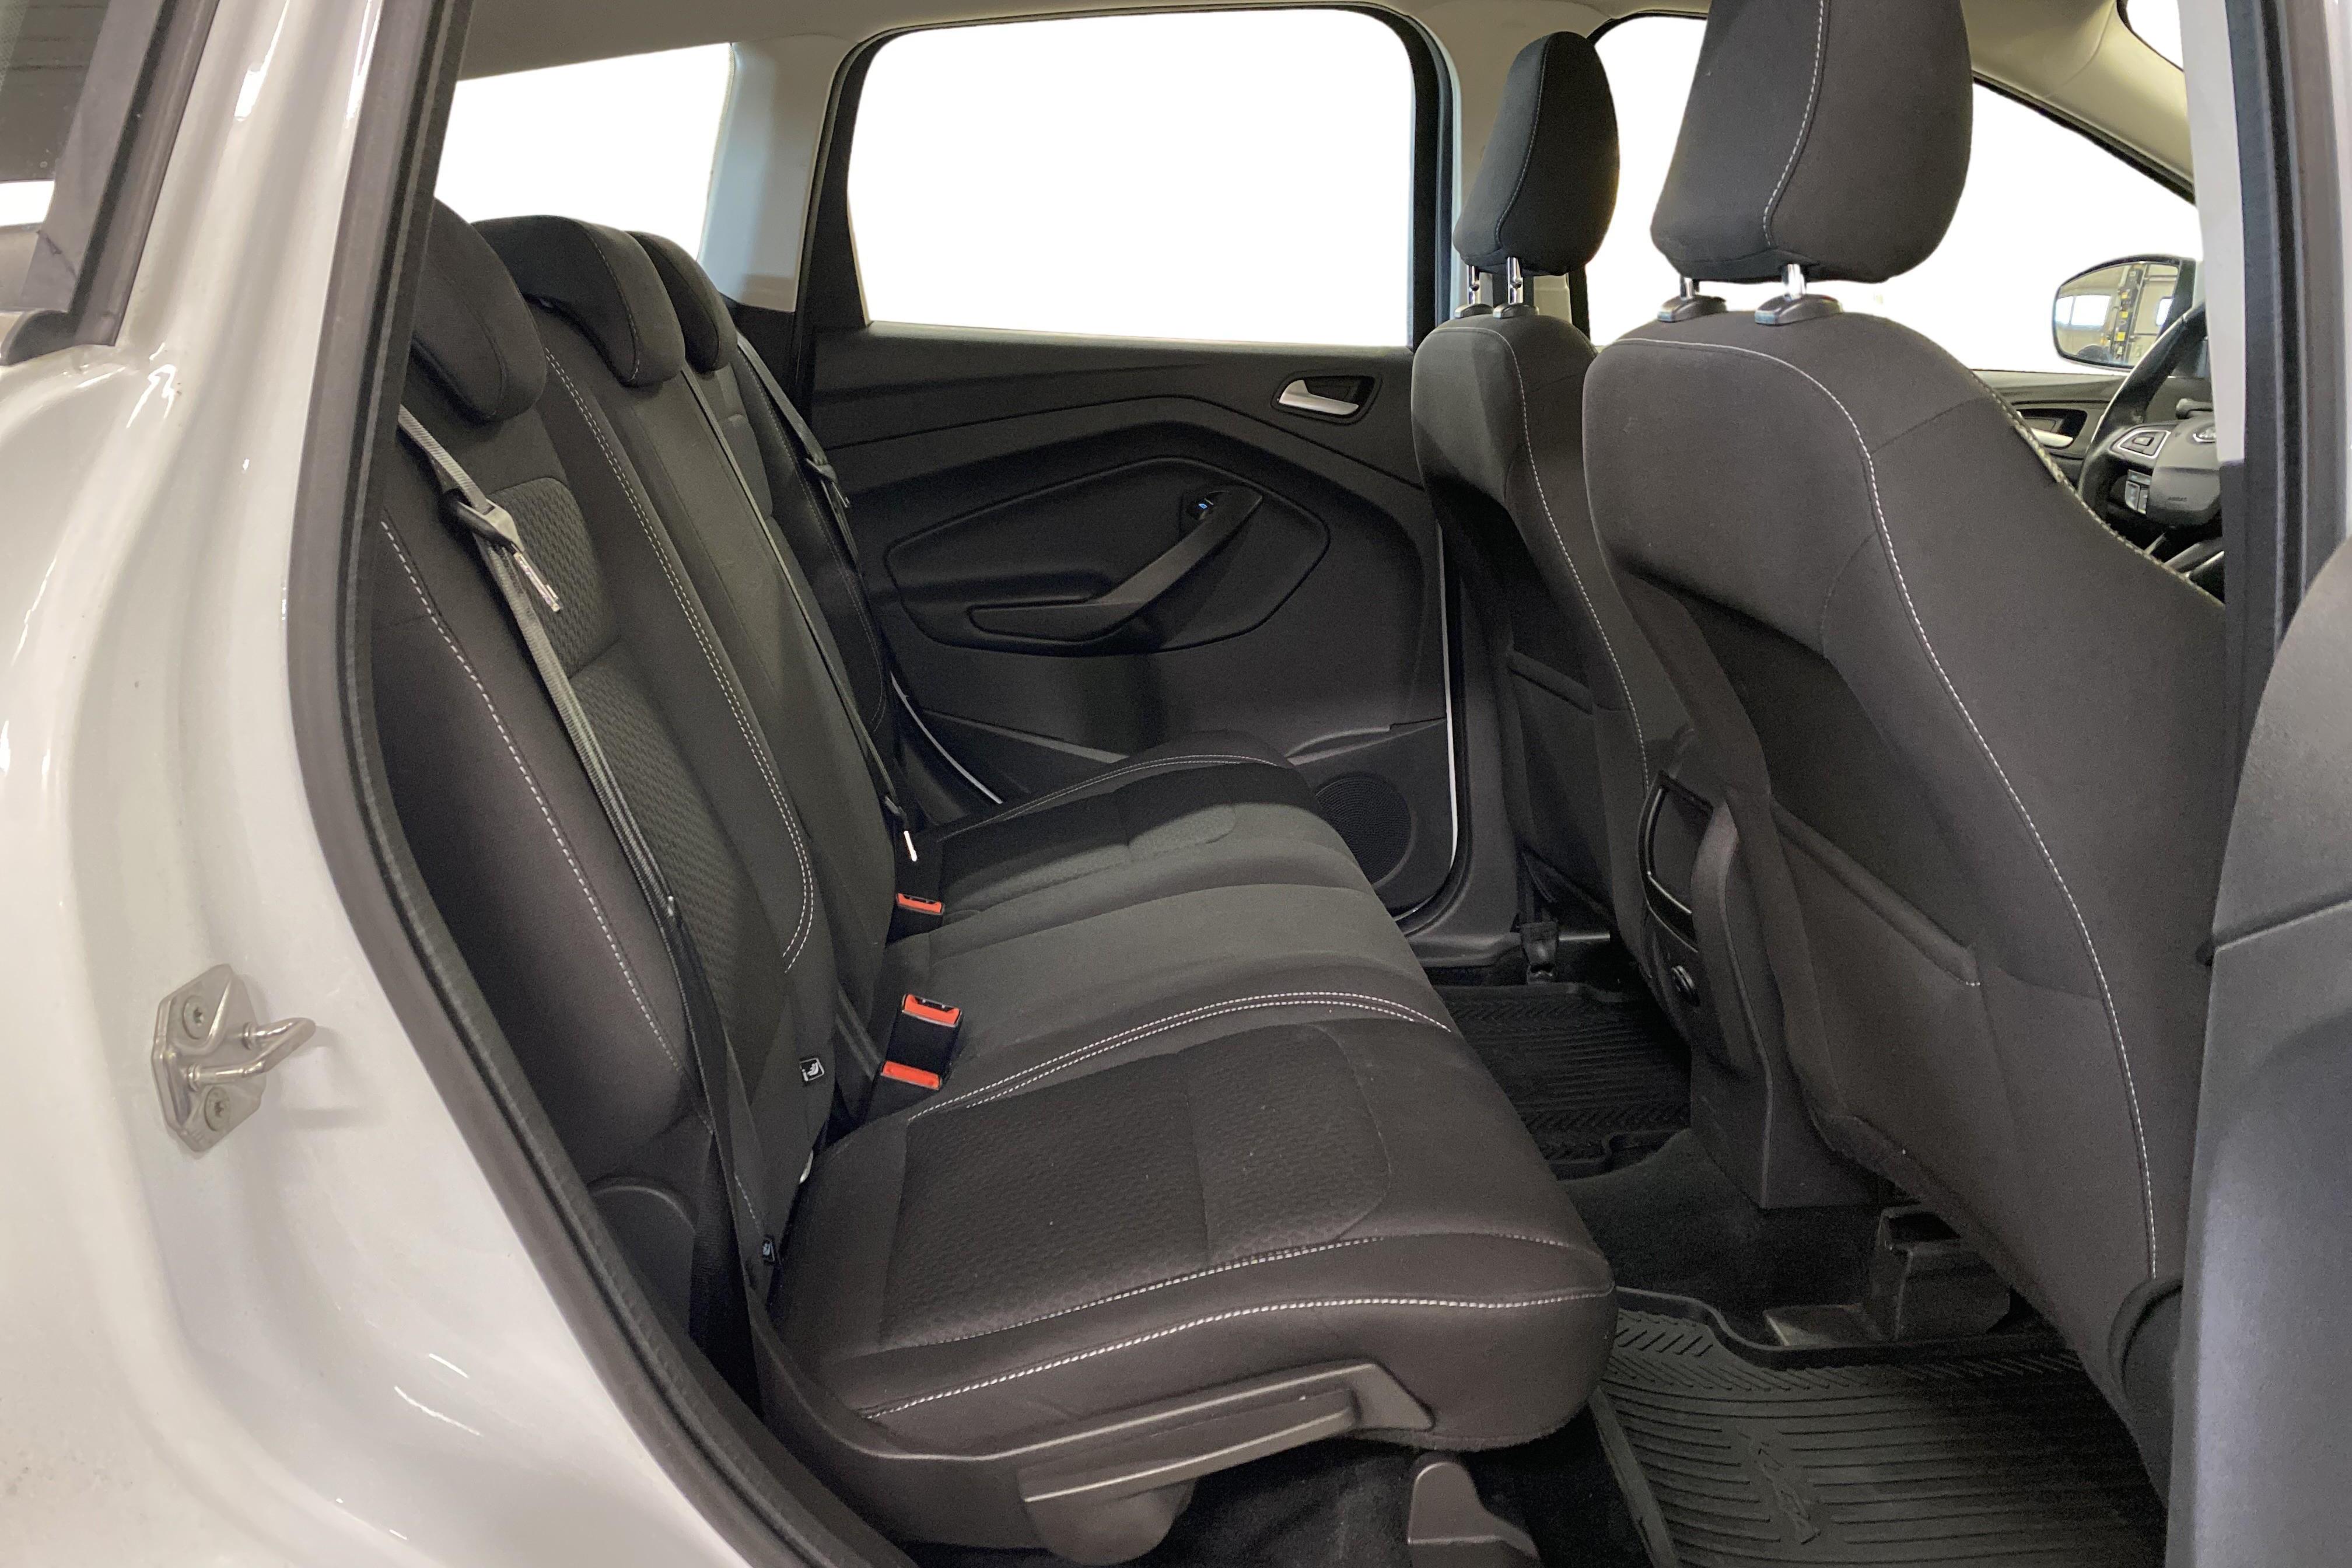 Ford Kuga 2.0 TDCi AWD (150hk) - 82 460 km - Manual - white - 2019